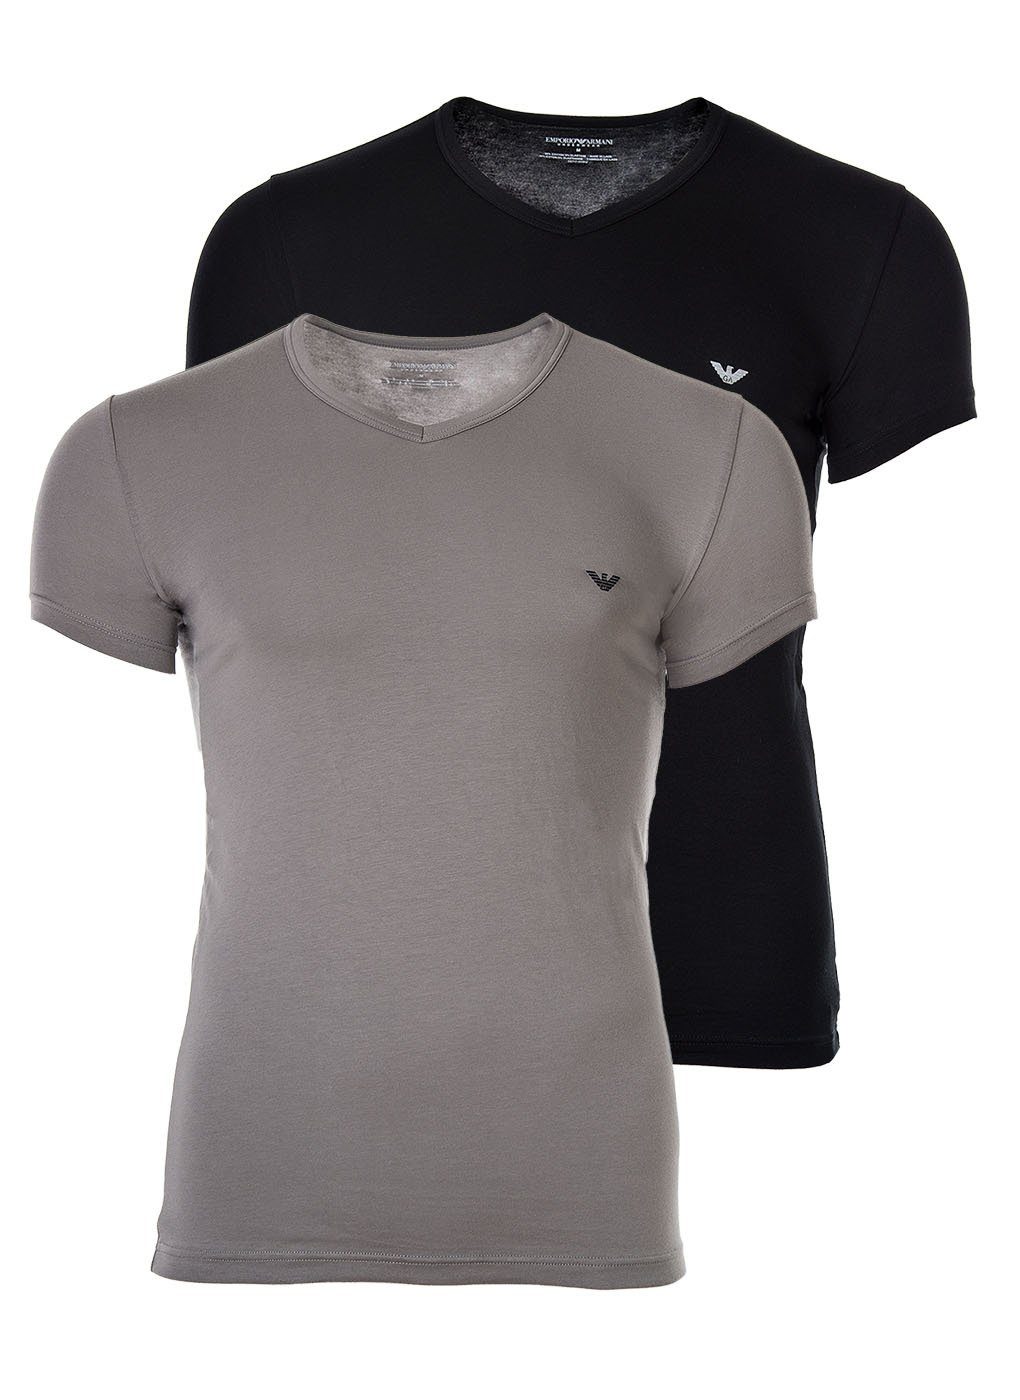 Emporio Armani T-Shirt Herren T-Shirt 2er Pack - V-Neck, V-Ausschnitt schwarz/grau